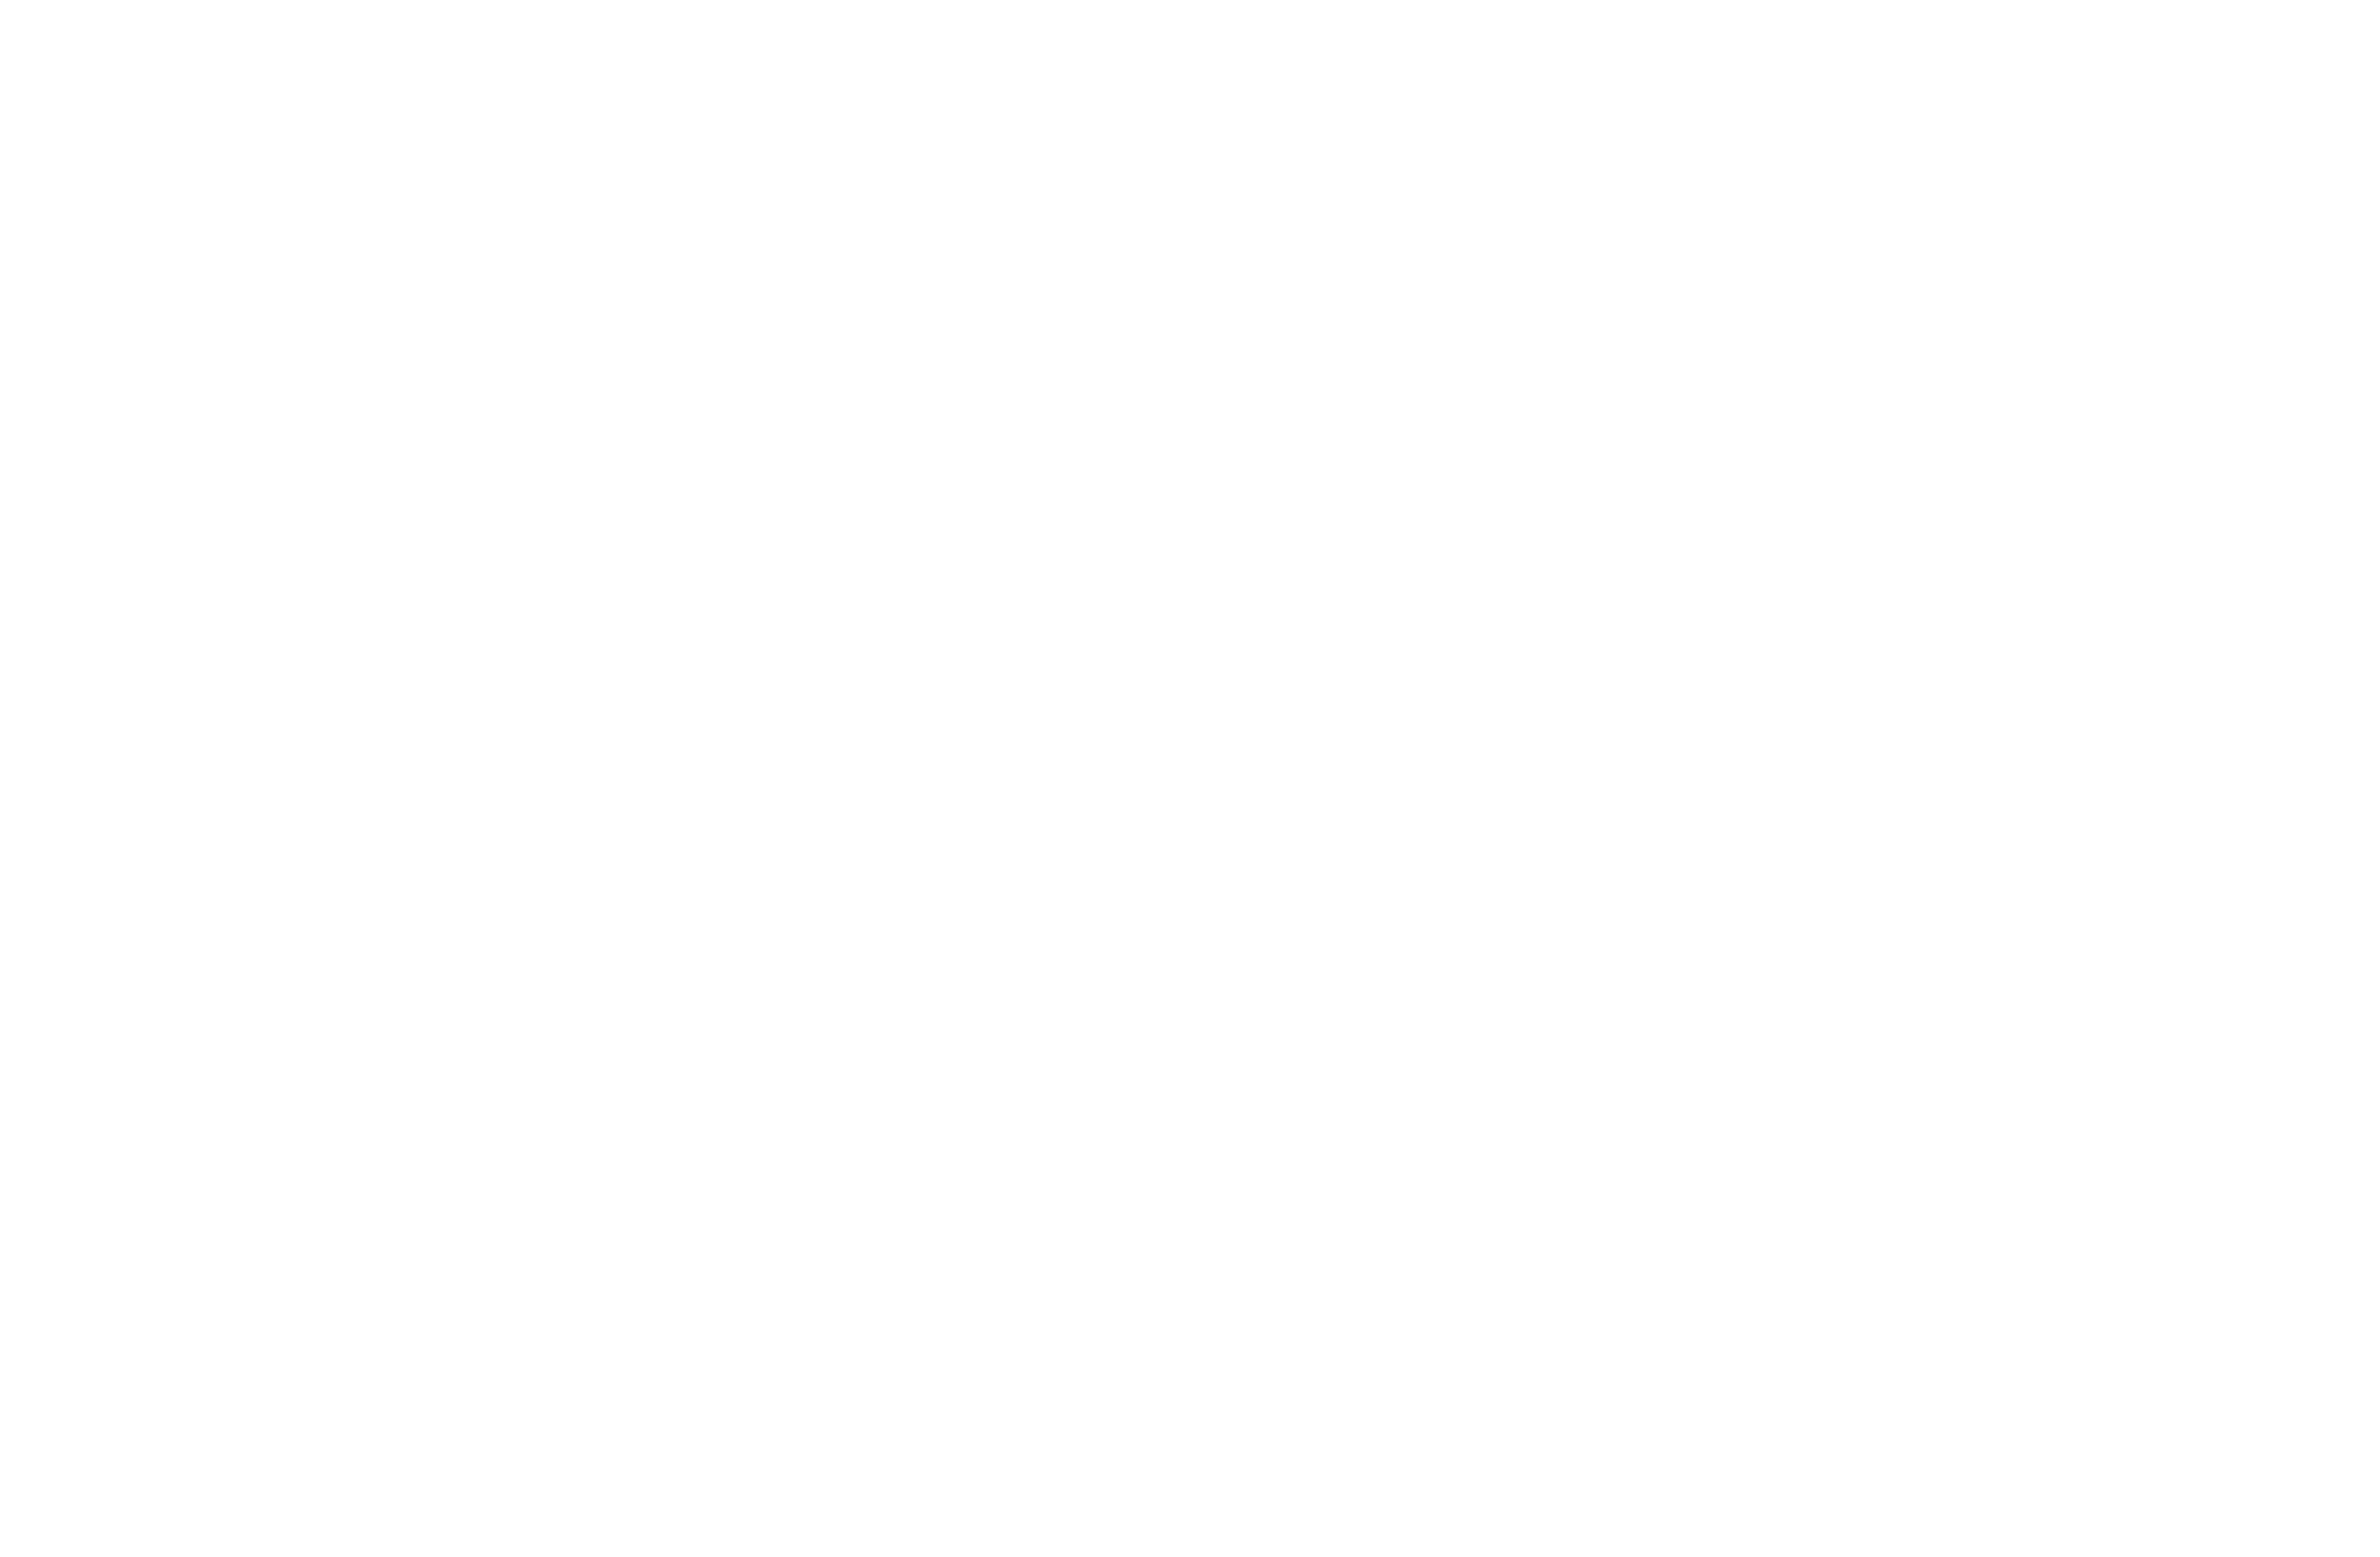 Moon Man's Landing